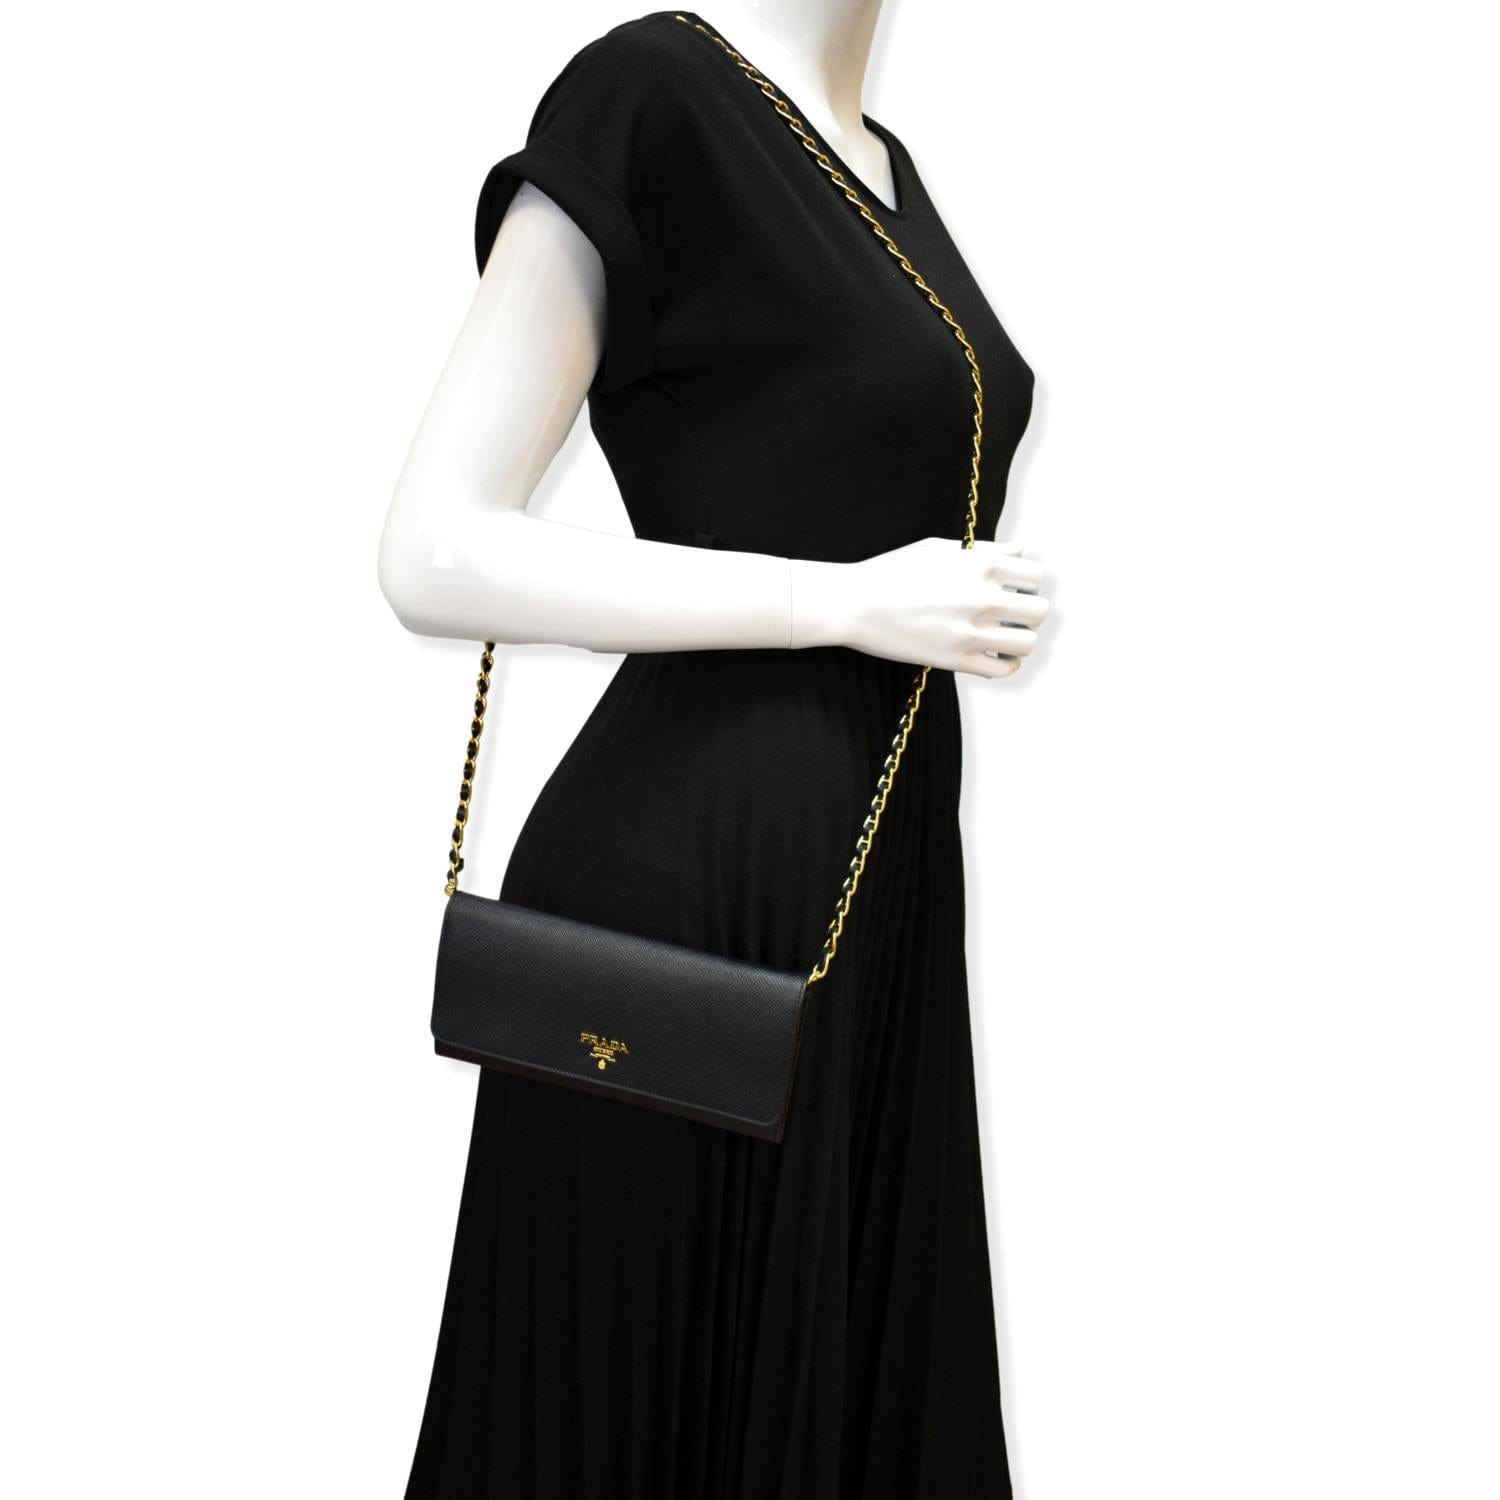 Prada Ladies Black Pattina Saffiano Leather Shoulder Bag